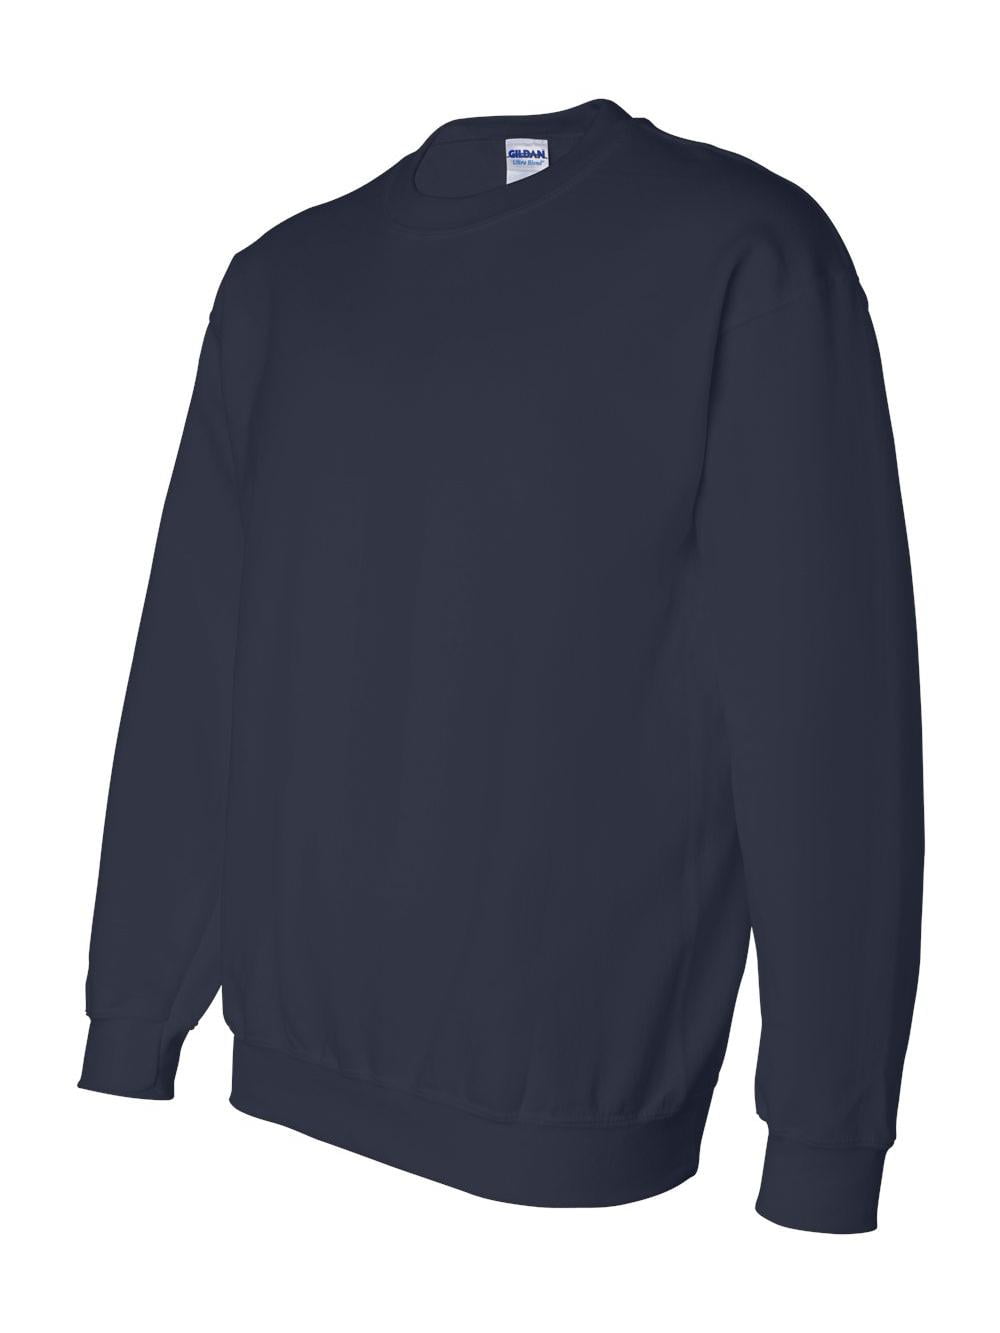 Gildan - DryBlend Crewneck Sweatshirt - 12000 - Walmart.com